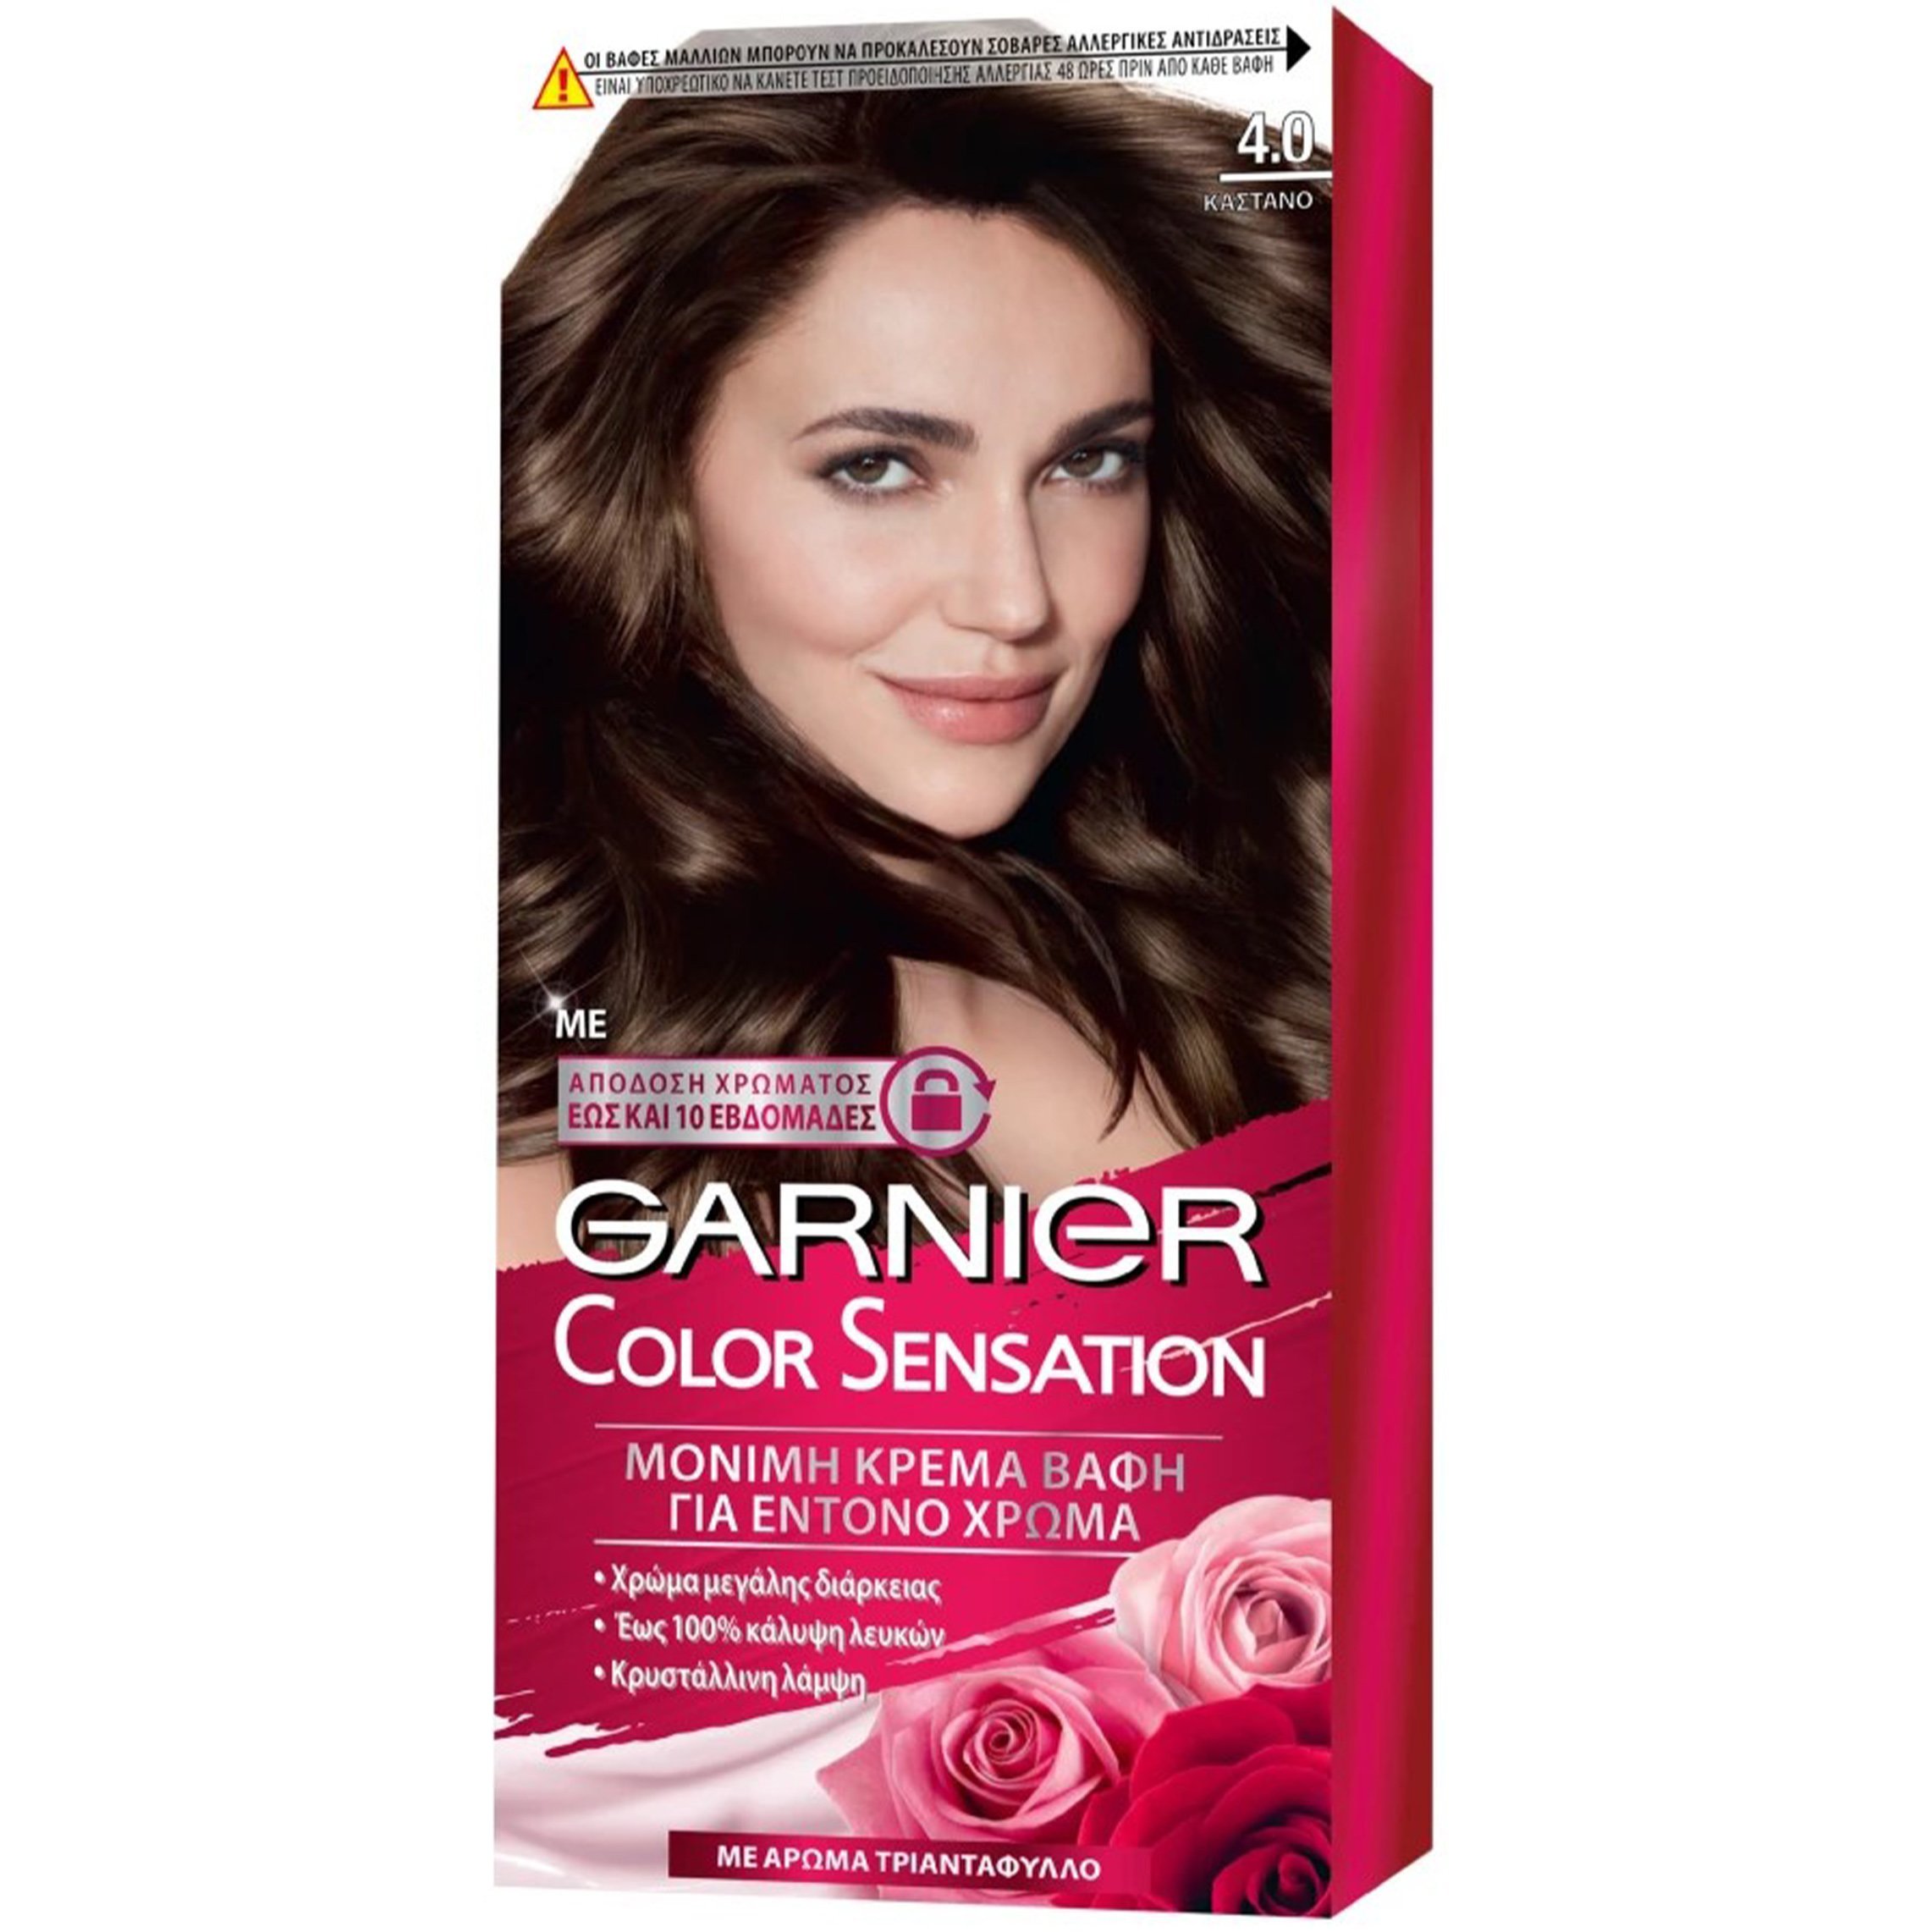 Garnier Color Sensation Permanent Hair Color Kit Μόνιμη Κρέμα Βαφή Μαλλιών με Άρωμα Τριαντάφυλλο 1 Τεμάχιο – 4.0 Καστανό